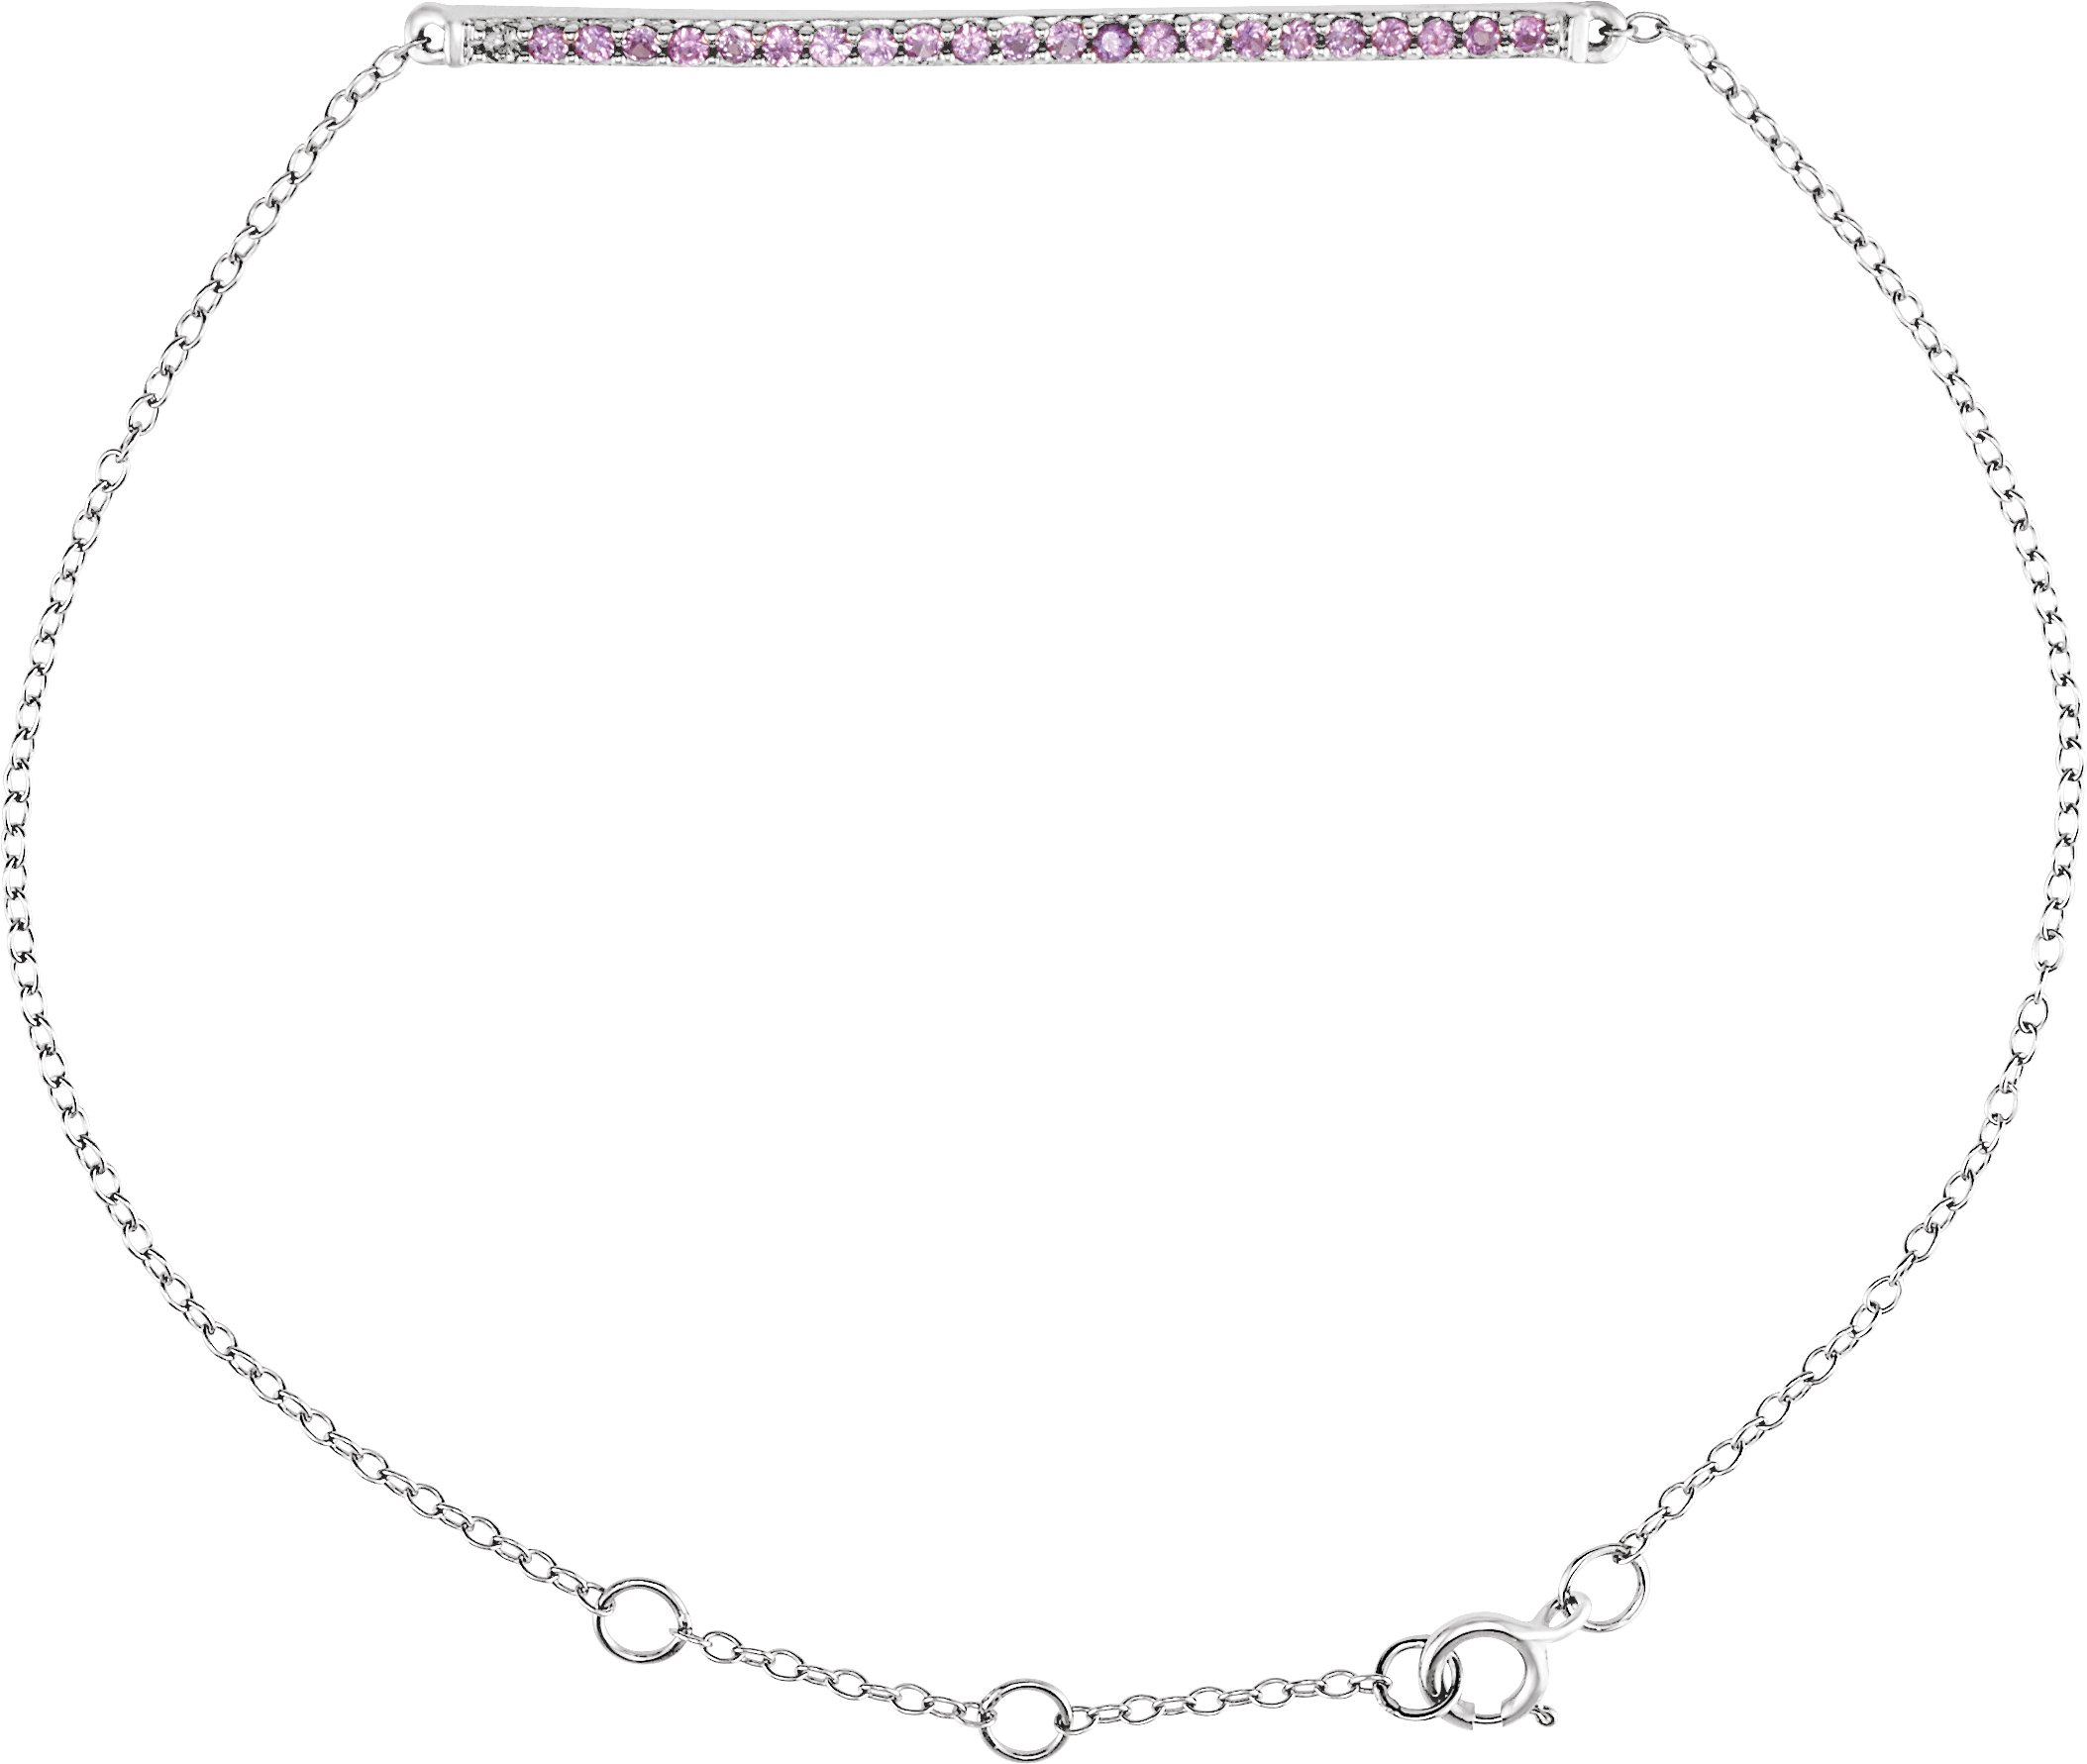 14K White Natural Pink Sapphire 8" Bracelet